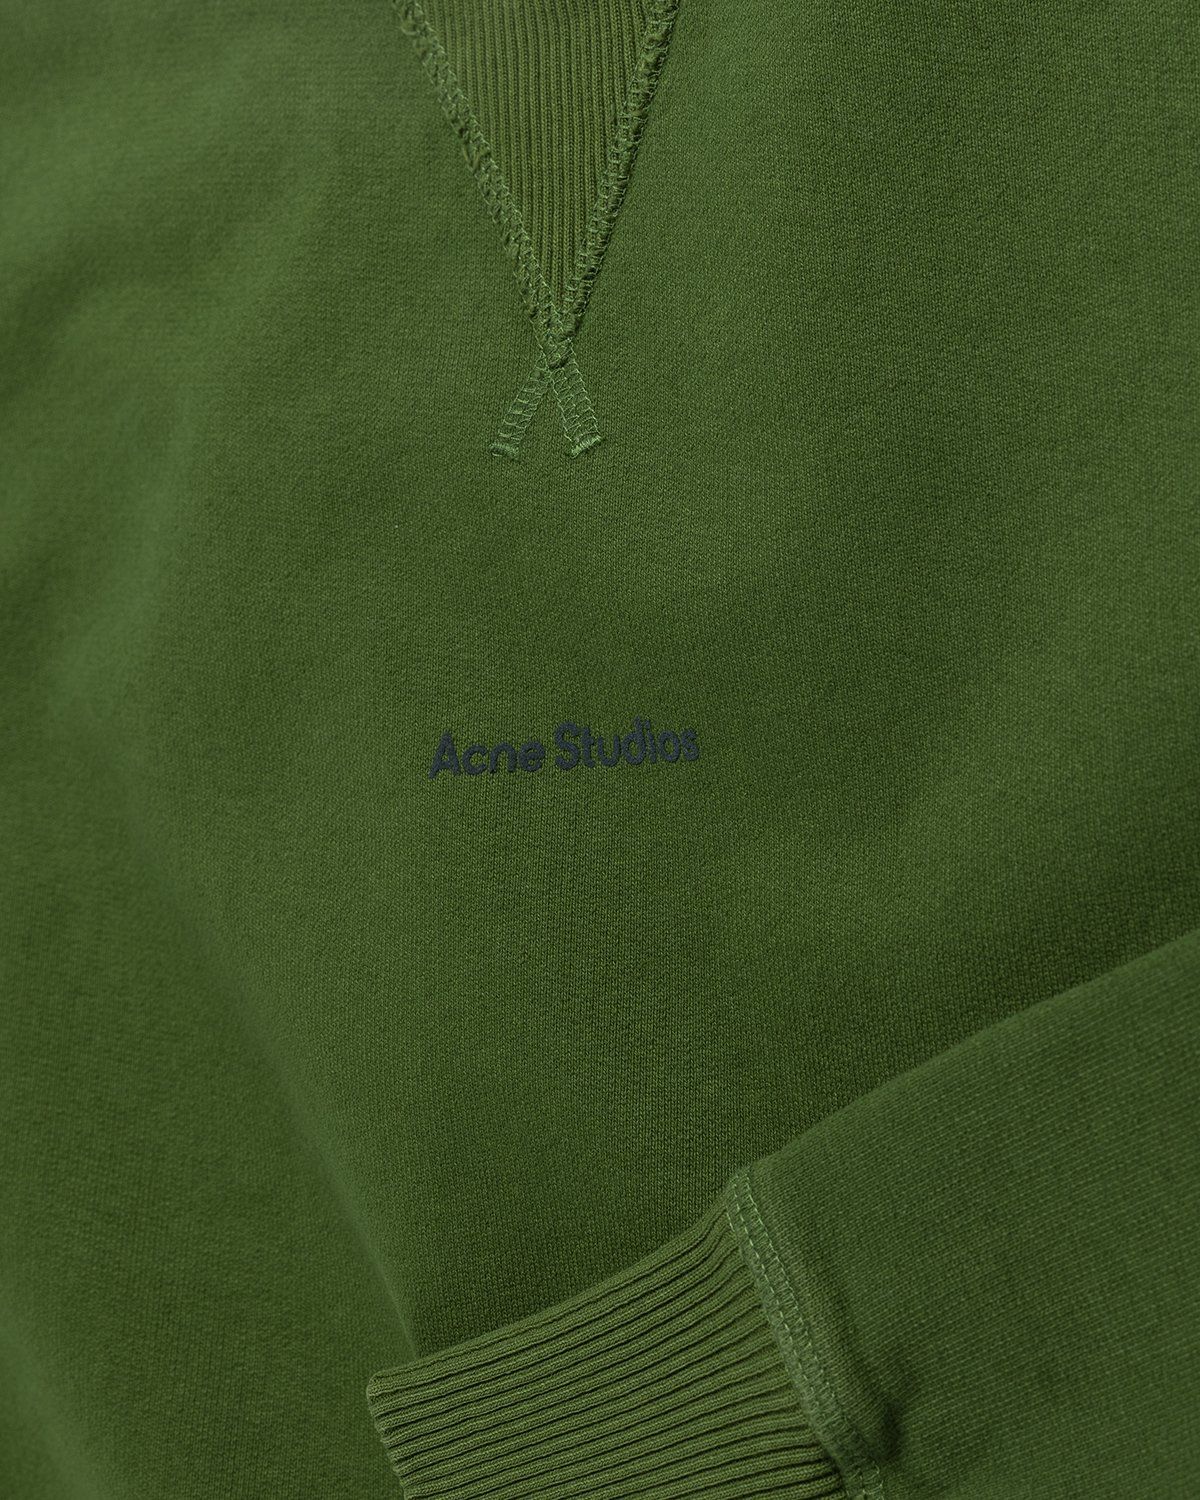 Acne Studios – Organic Cotton Crewneck Sweatshirt Bottle Green - Sweats - Green - Image 3